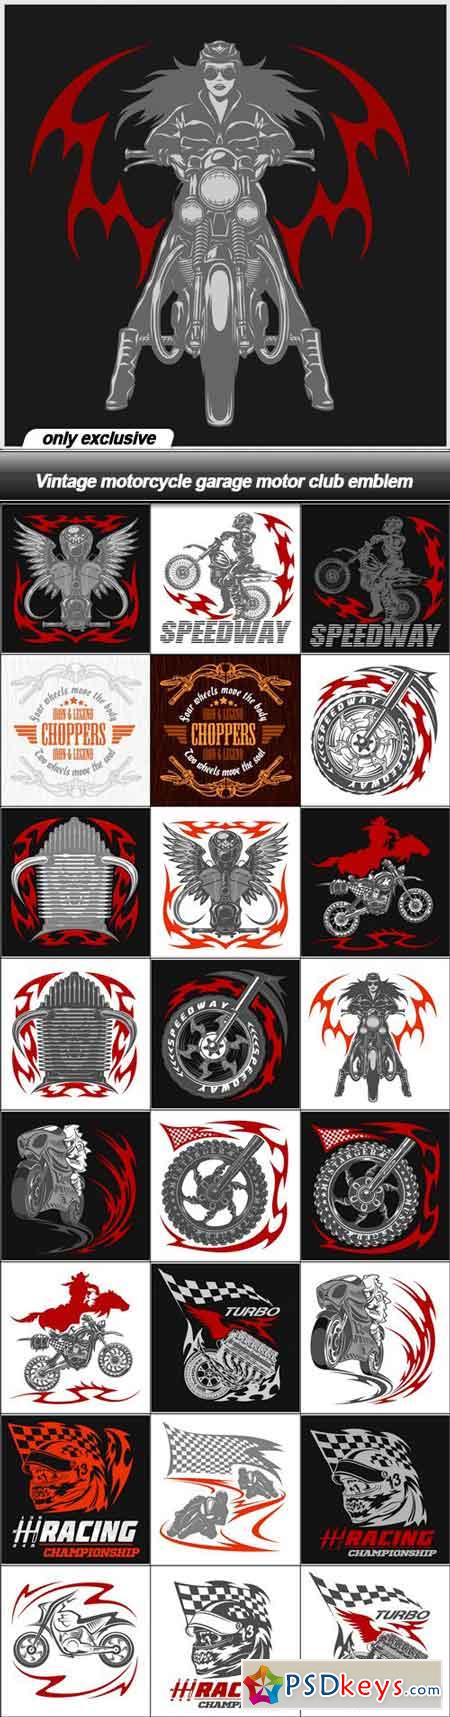 Vintage motorcycle garage motor club emblem - 25 EPS